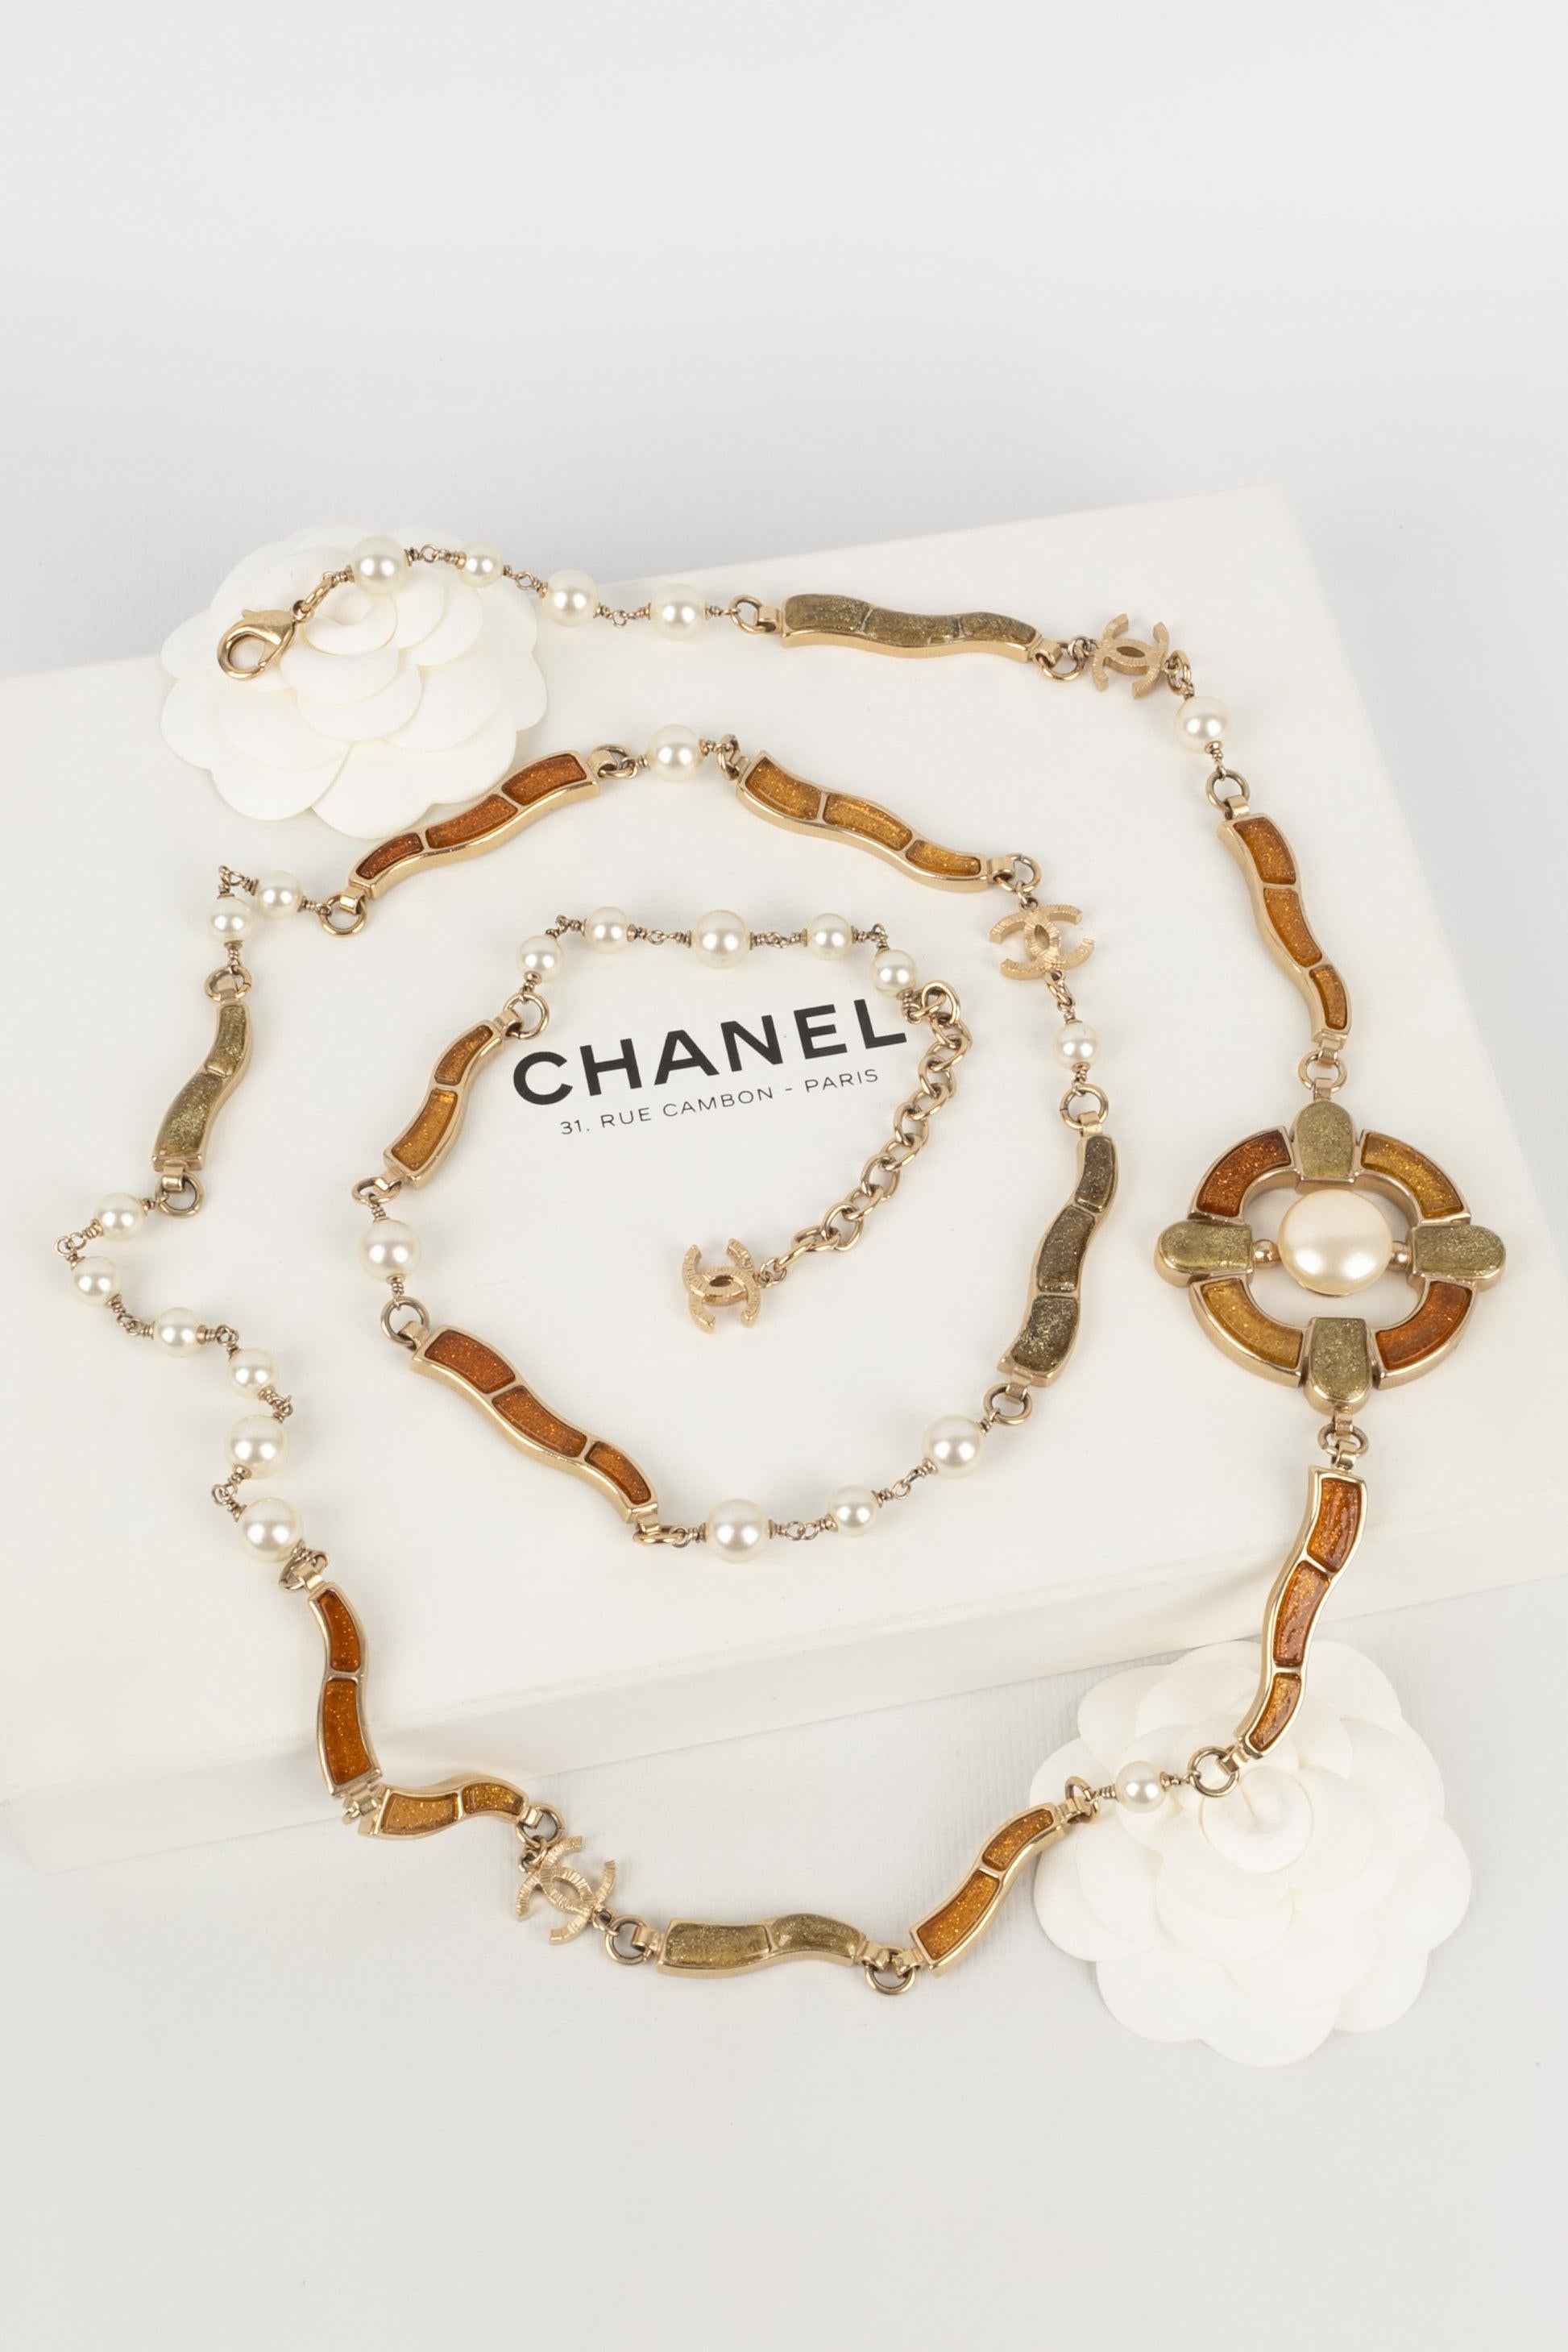 Lange Chanel-Halskette aus goldenem Metall, 2007 im Angebot 7